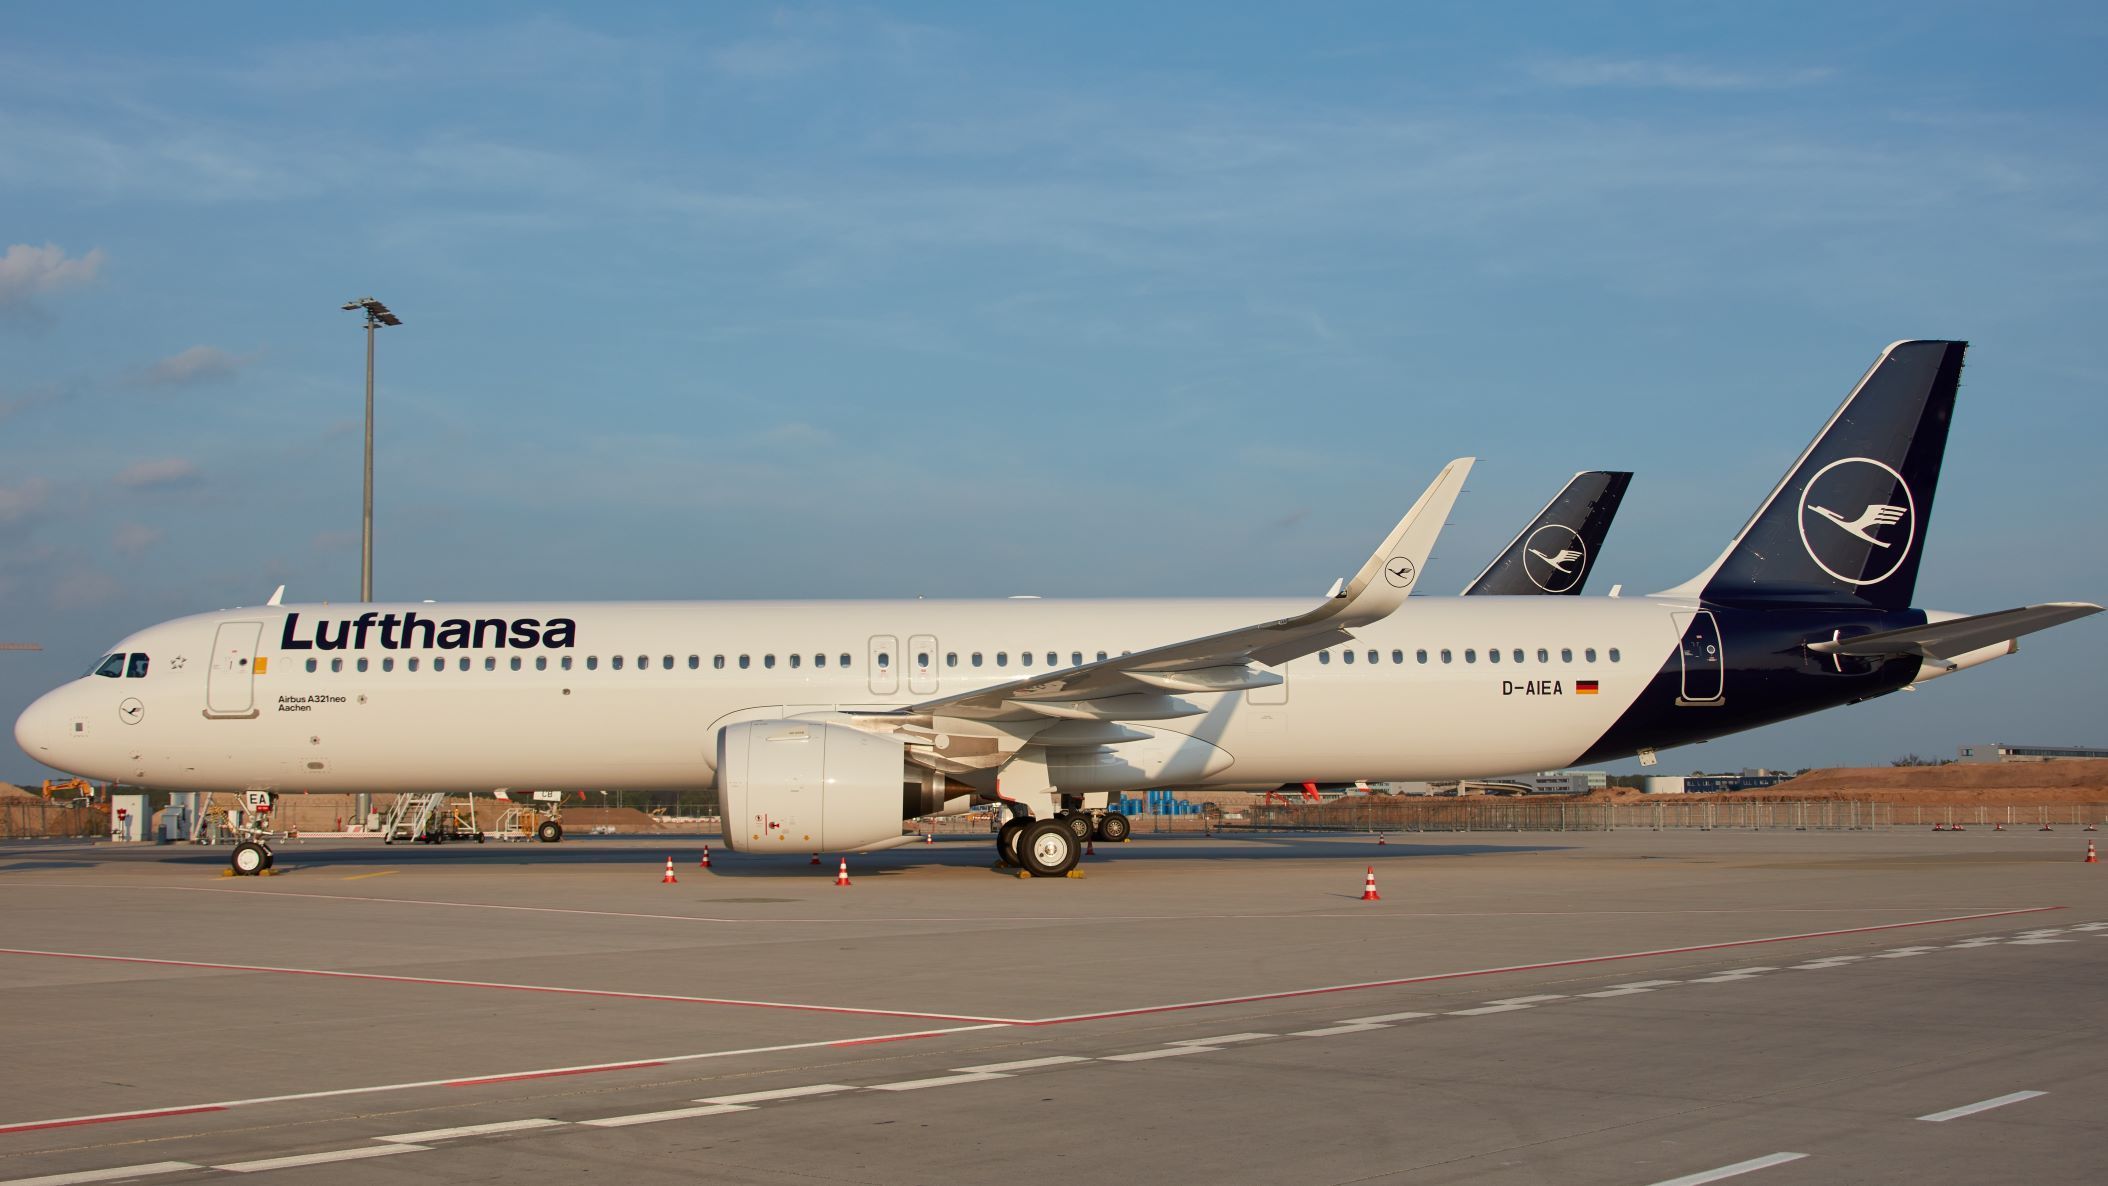 A white Lufthansa plane with blue tail.